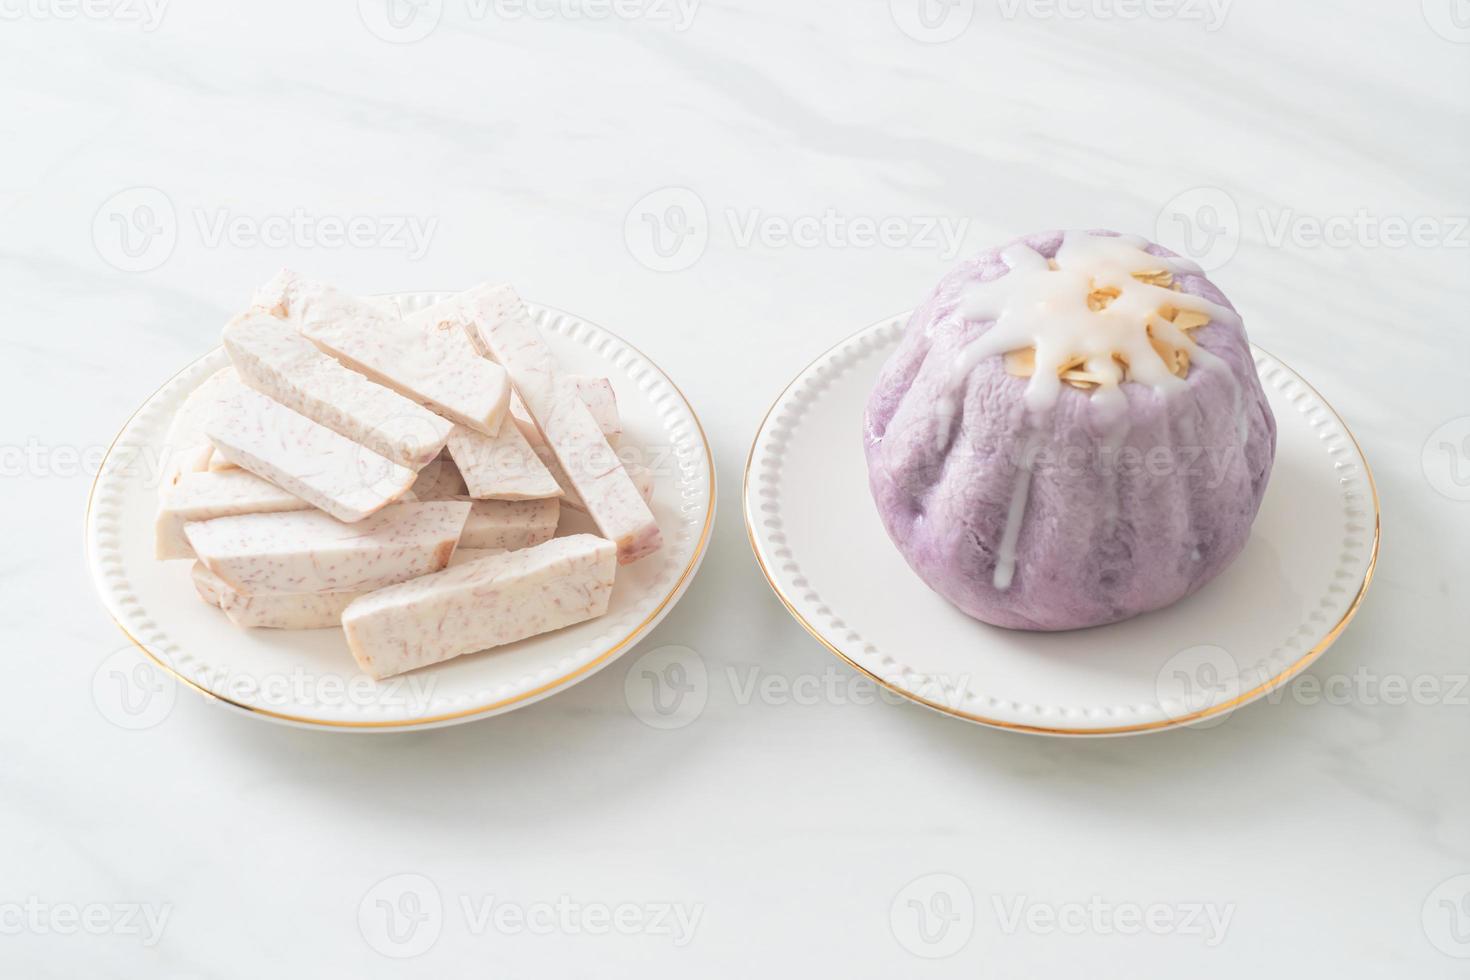 panino taro con crema di zucchero bianco e noci foto